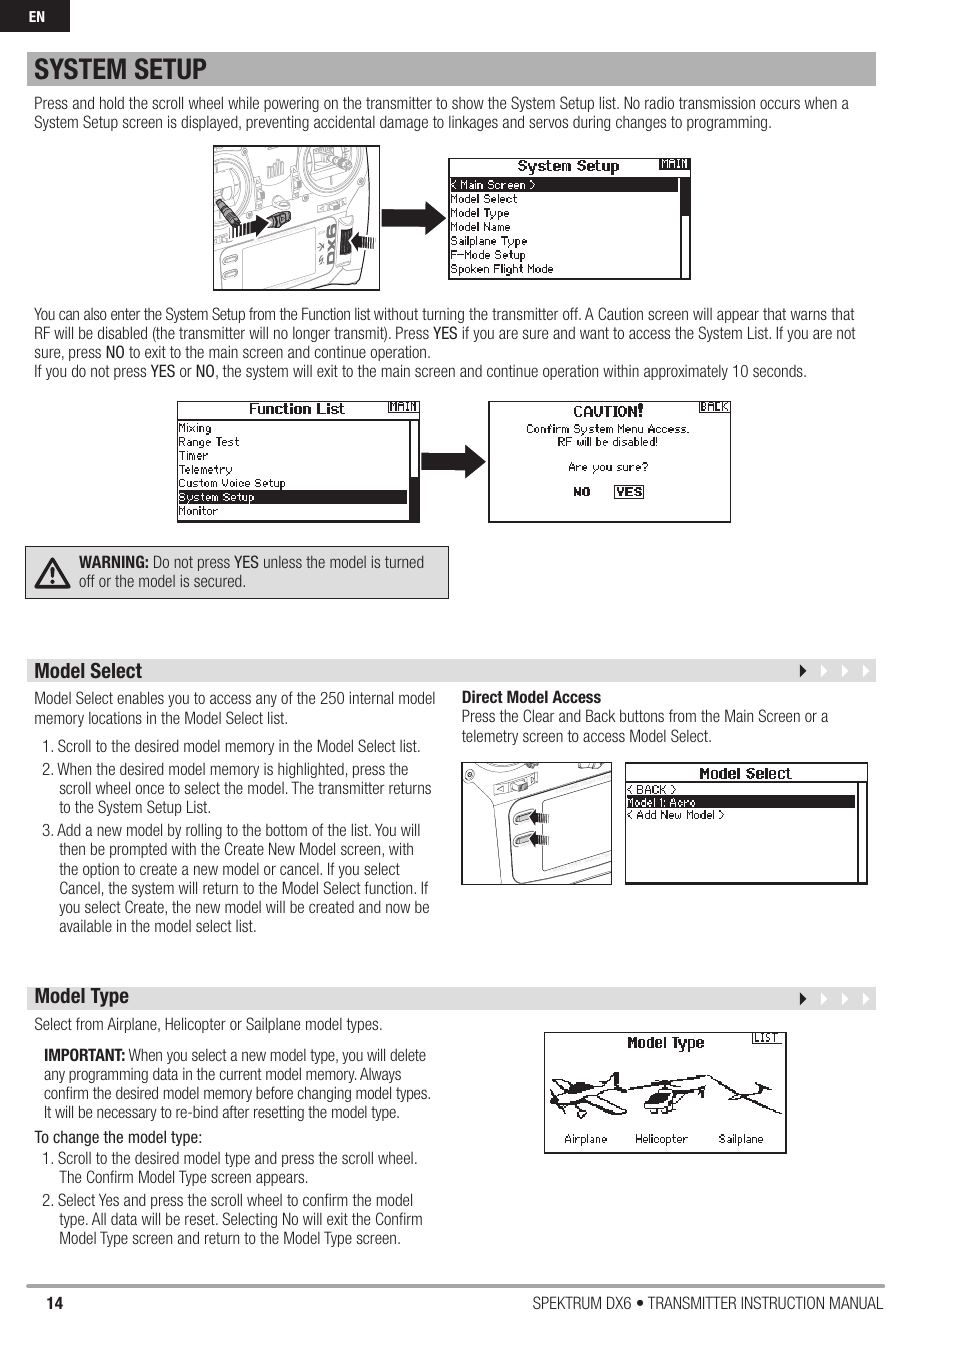 System setup, Model select, Model type | Spektrum DX6 User Manual | Page 14  / 48 | Original mode